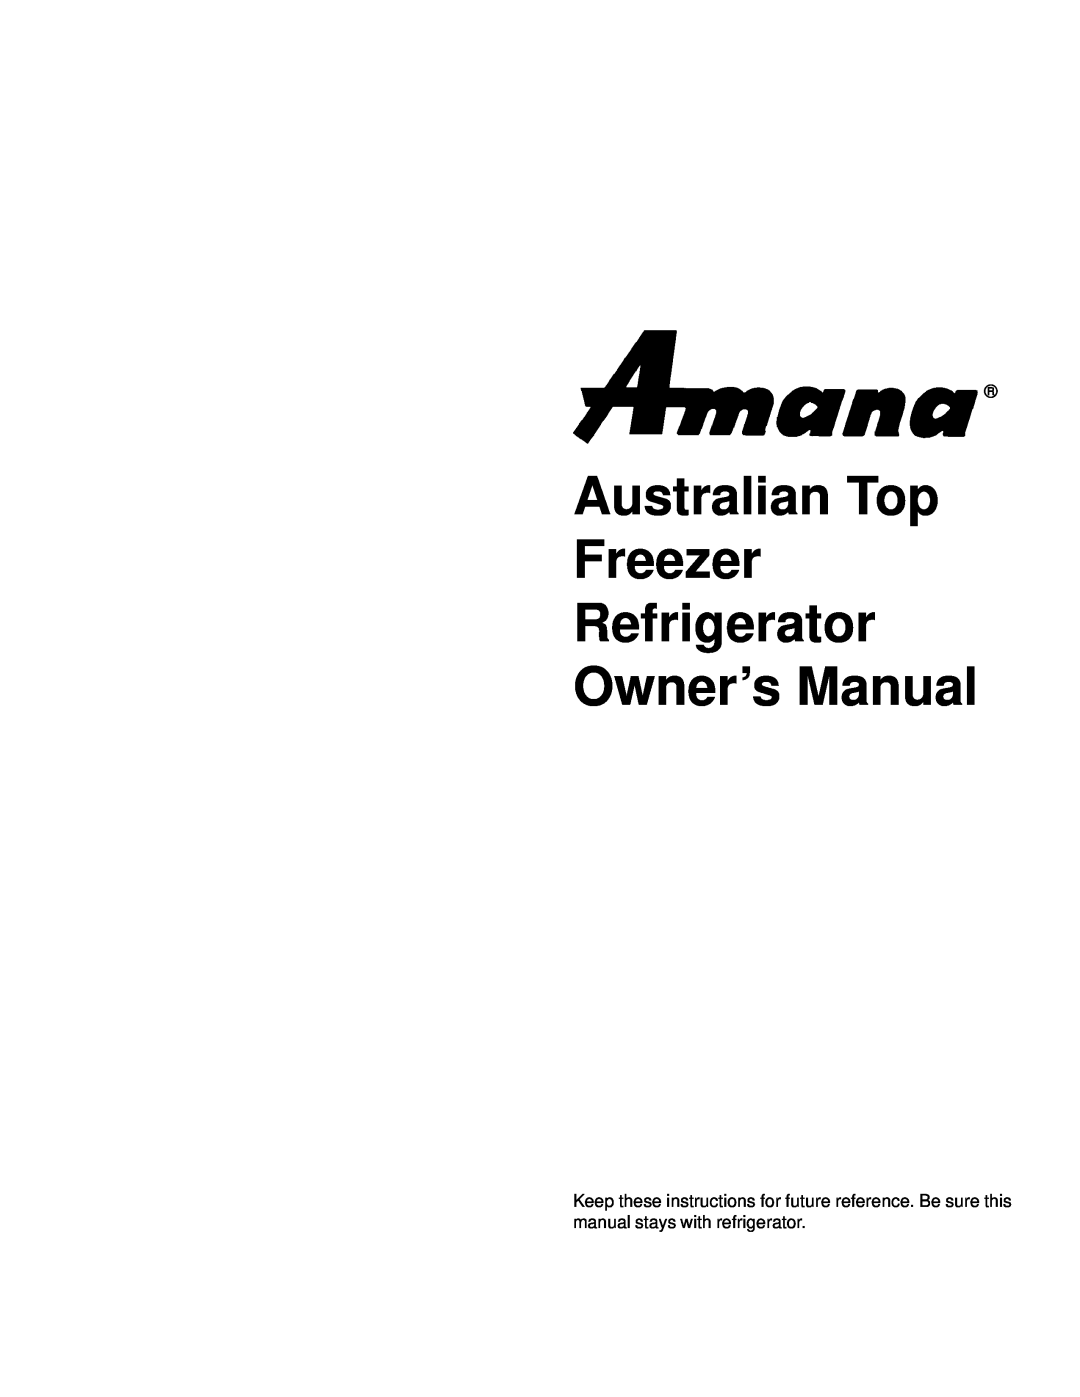 Amana Compact Refrigerator Freezer owner manual Australian Top Freezer Refrigerator 